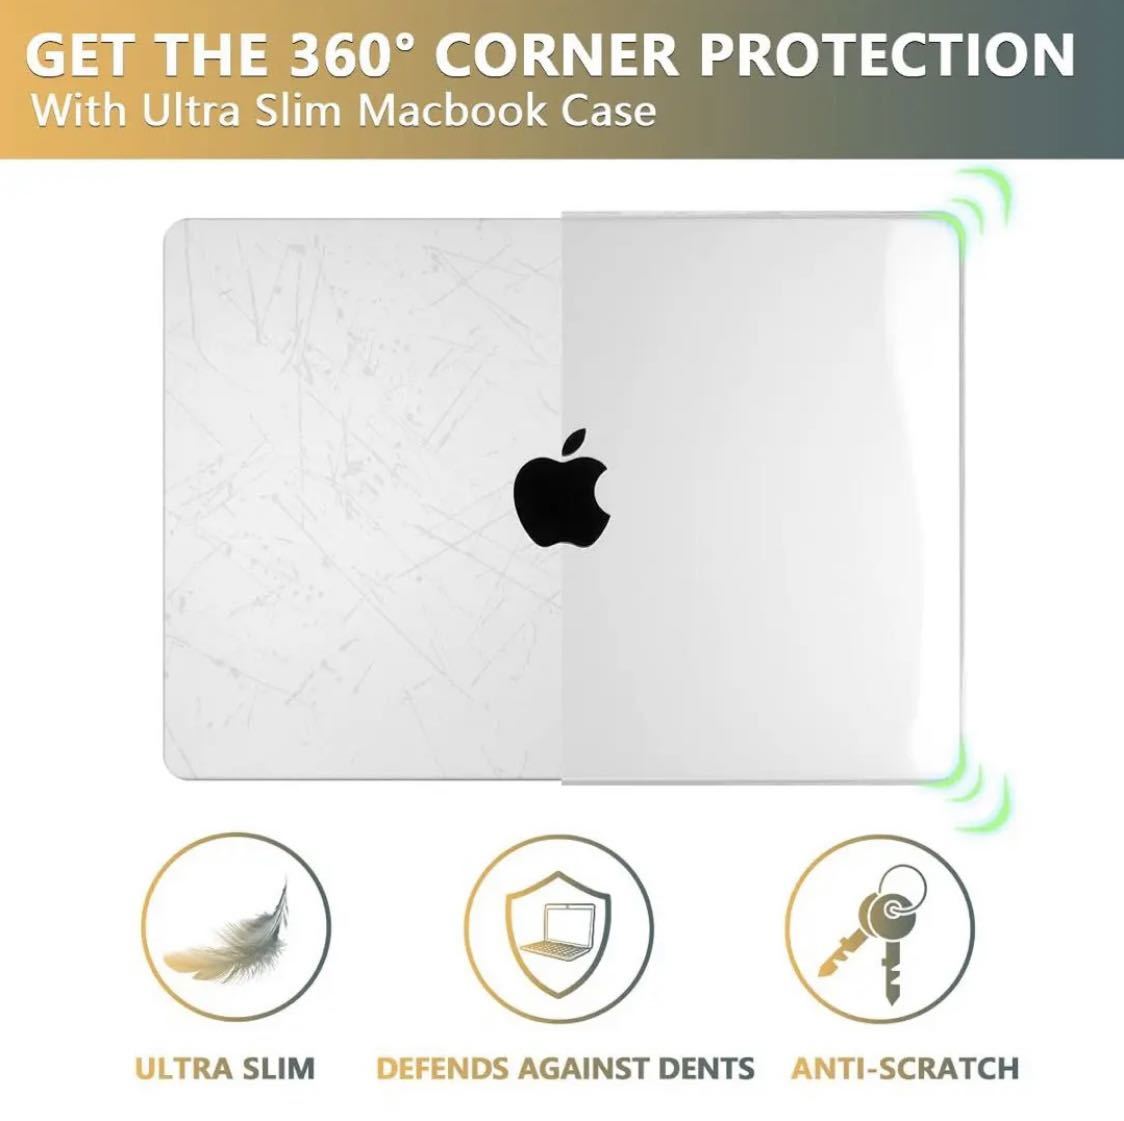 CISSOOK MacBook Pro16 -inch clear case set 